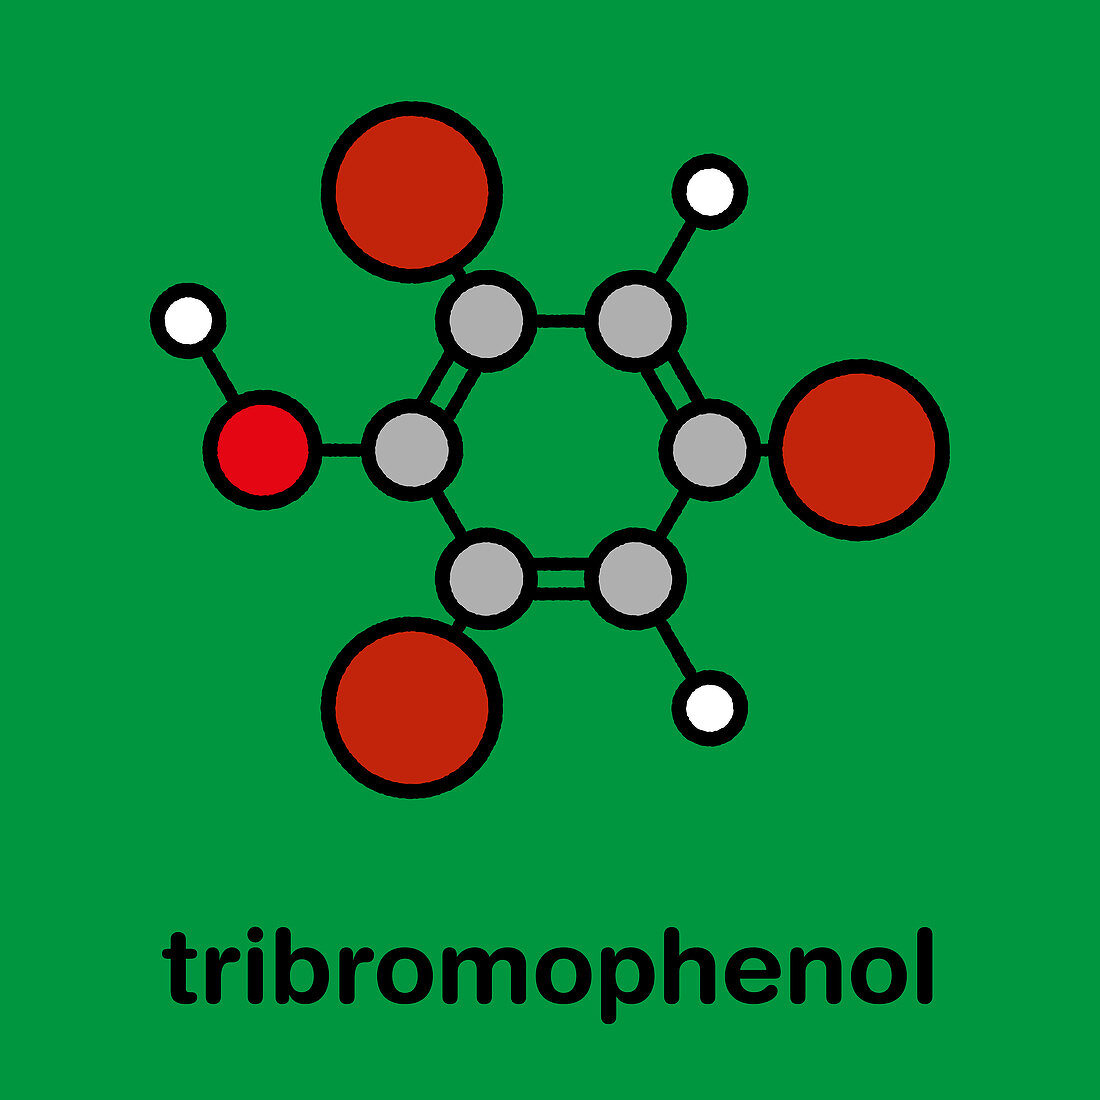 Tribromophenol molecule, illustration